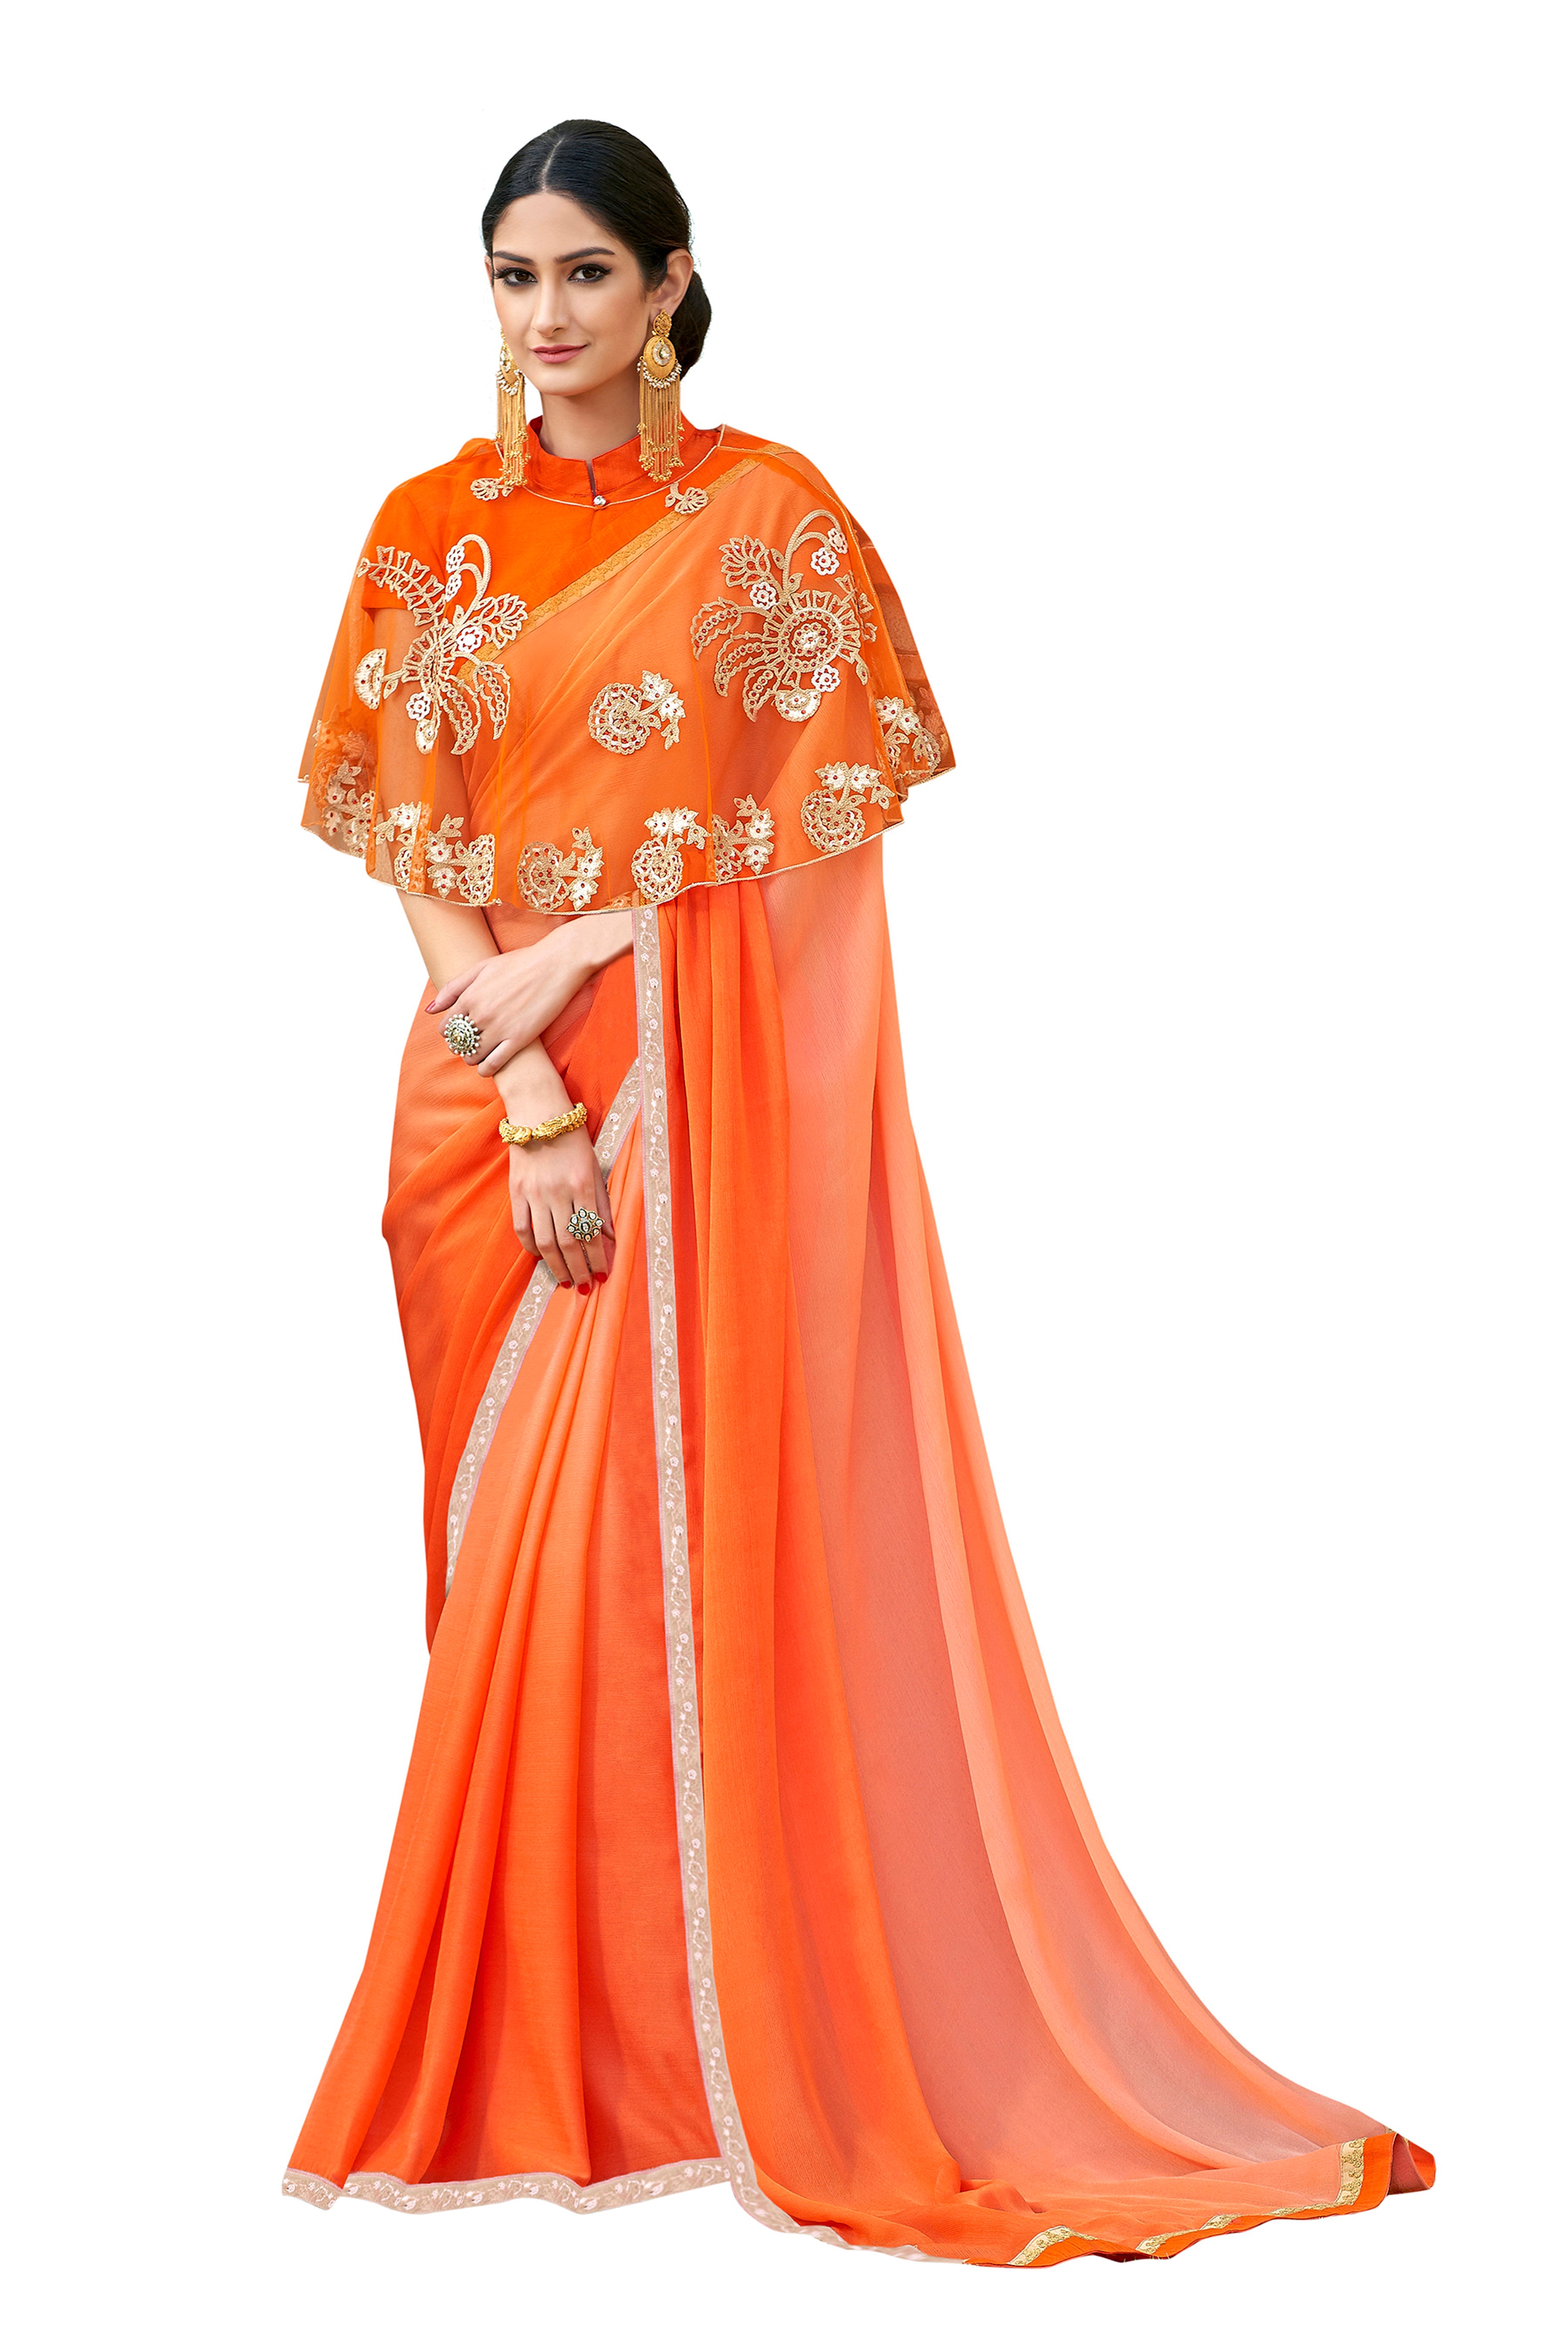 Women's Orange Designer Saree With Double Blouse - Vamika